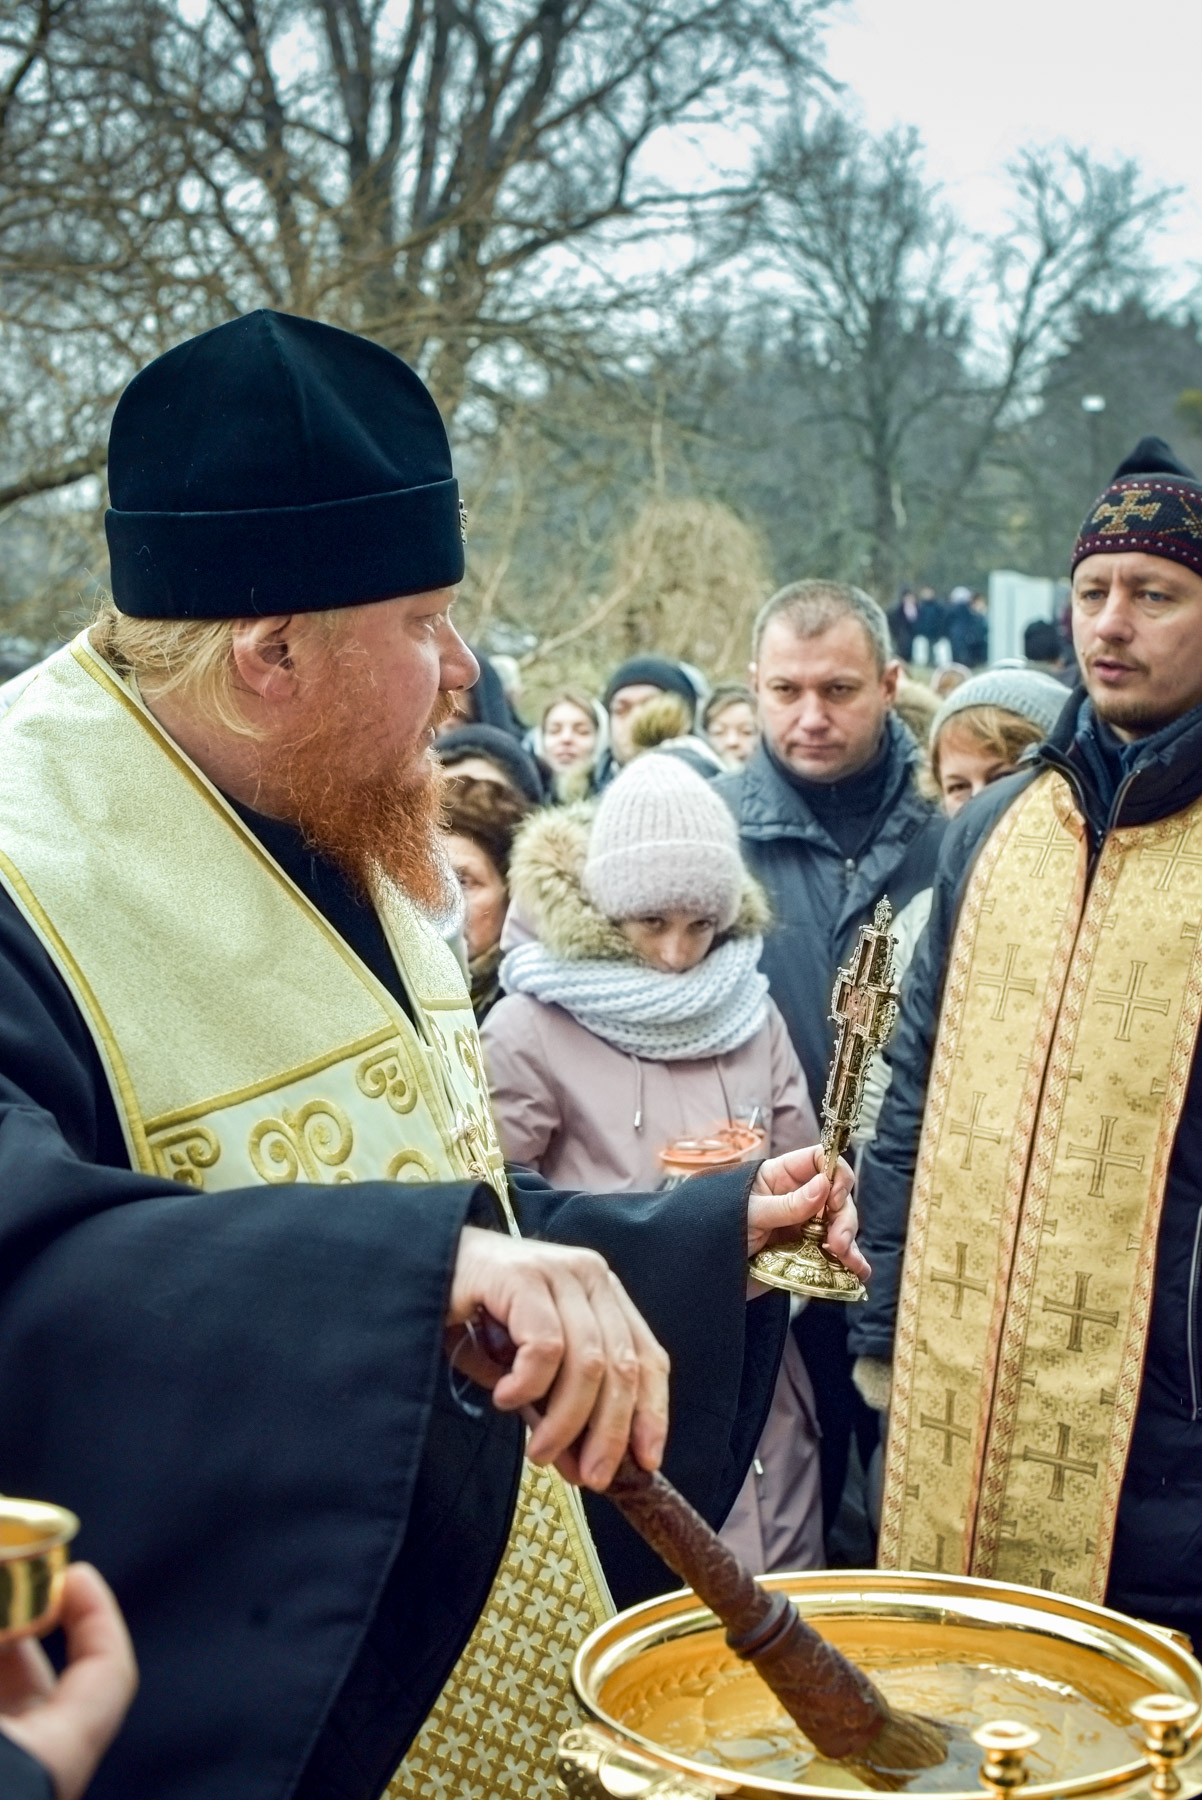 photos of orthodox christmas 0214 1